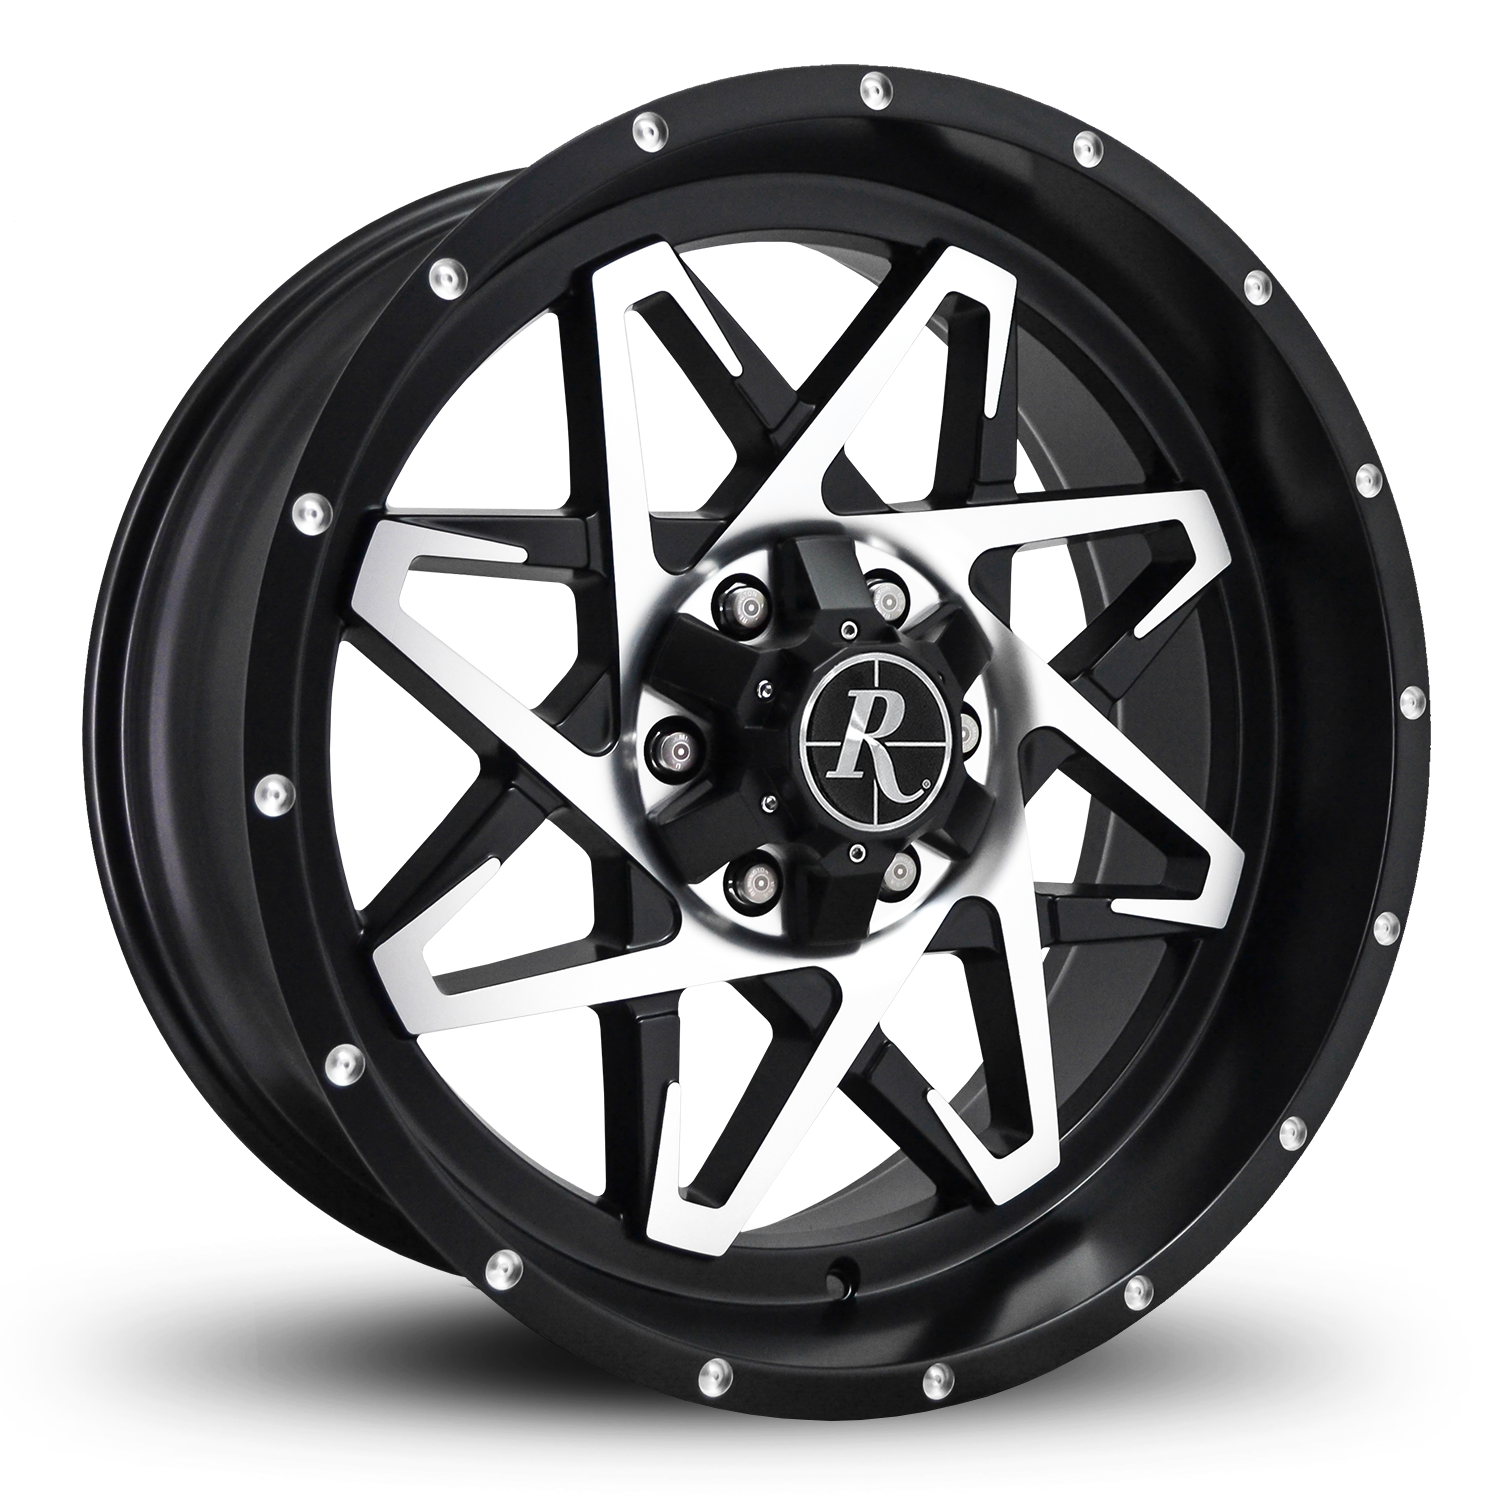 Buy Replacement Center Caps for the Remingotn Caliber Wheel Rims